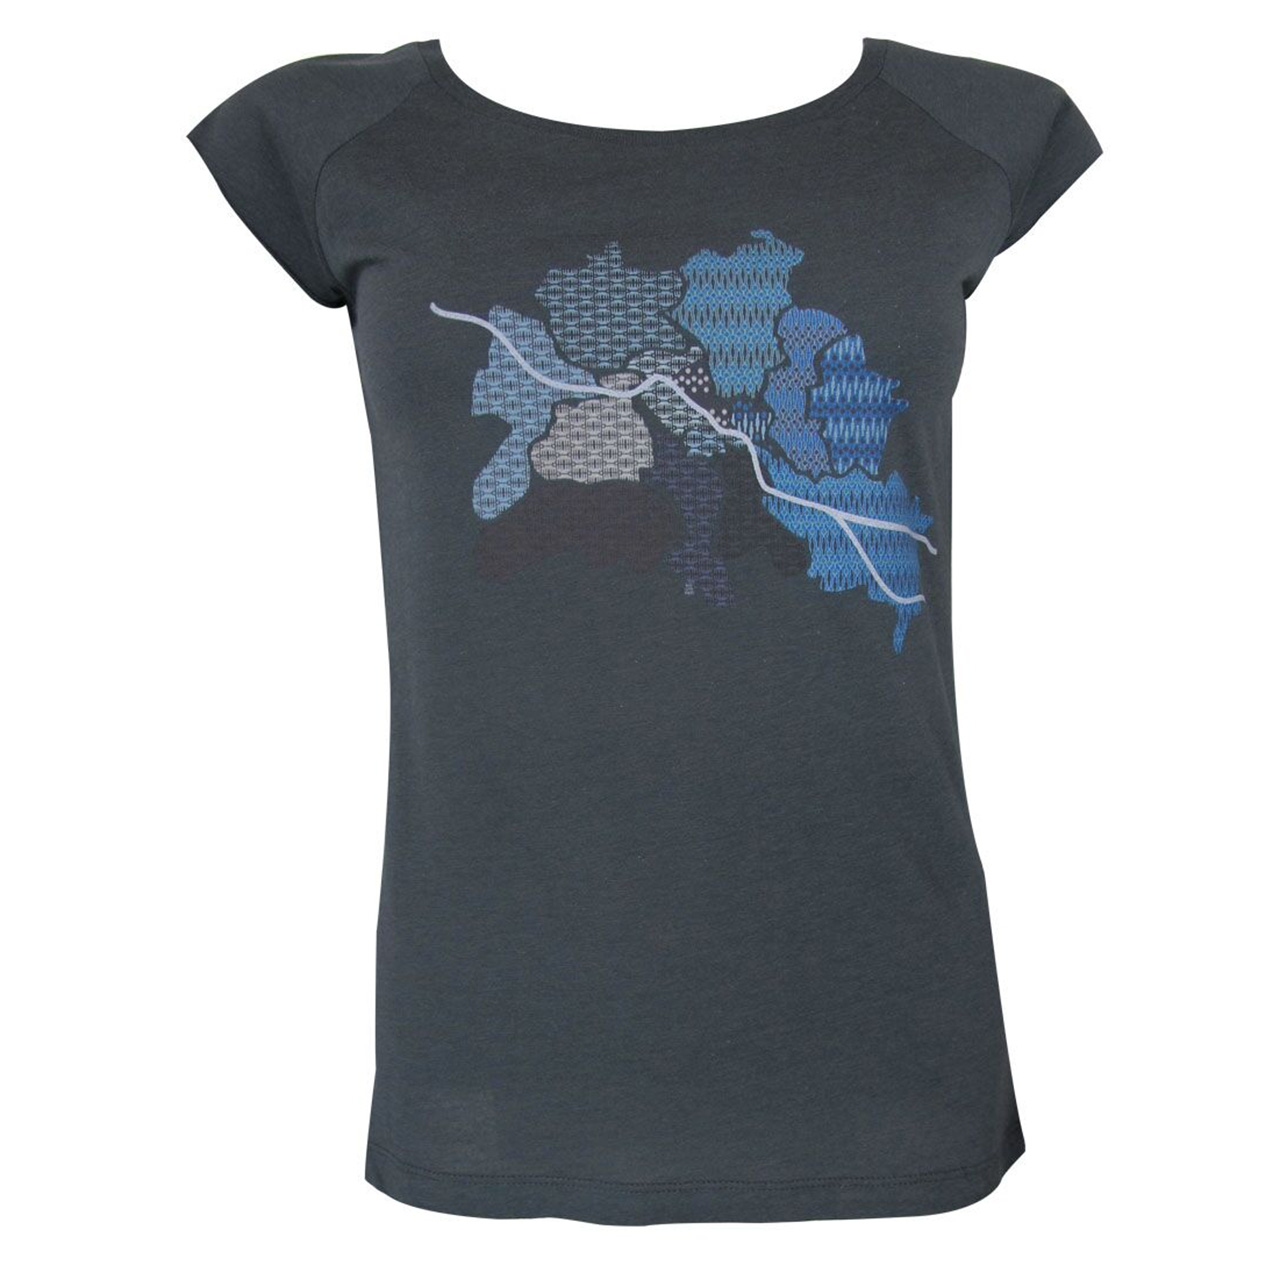 Berlin Design T-Shirt Karte girls grau/blau